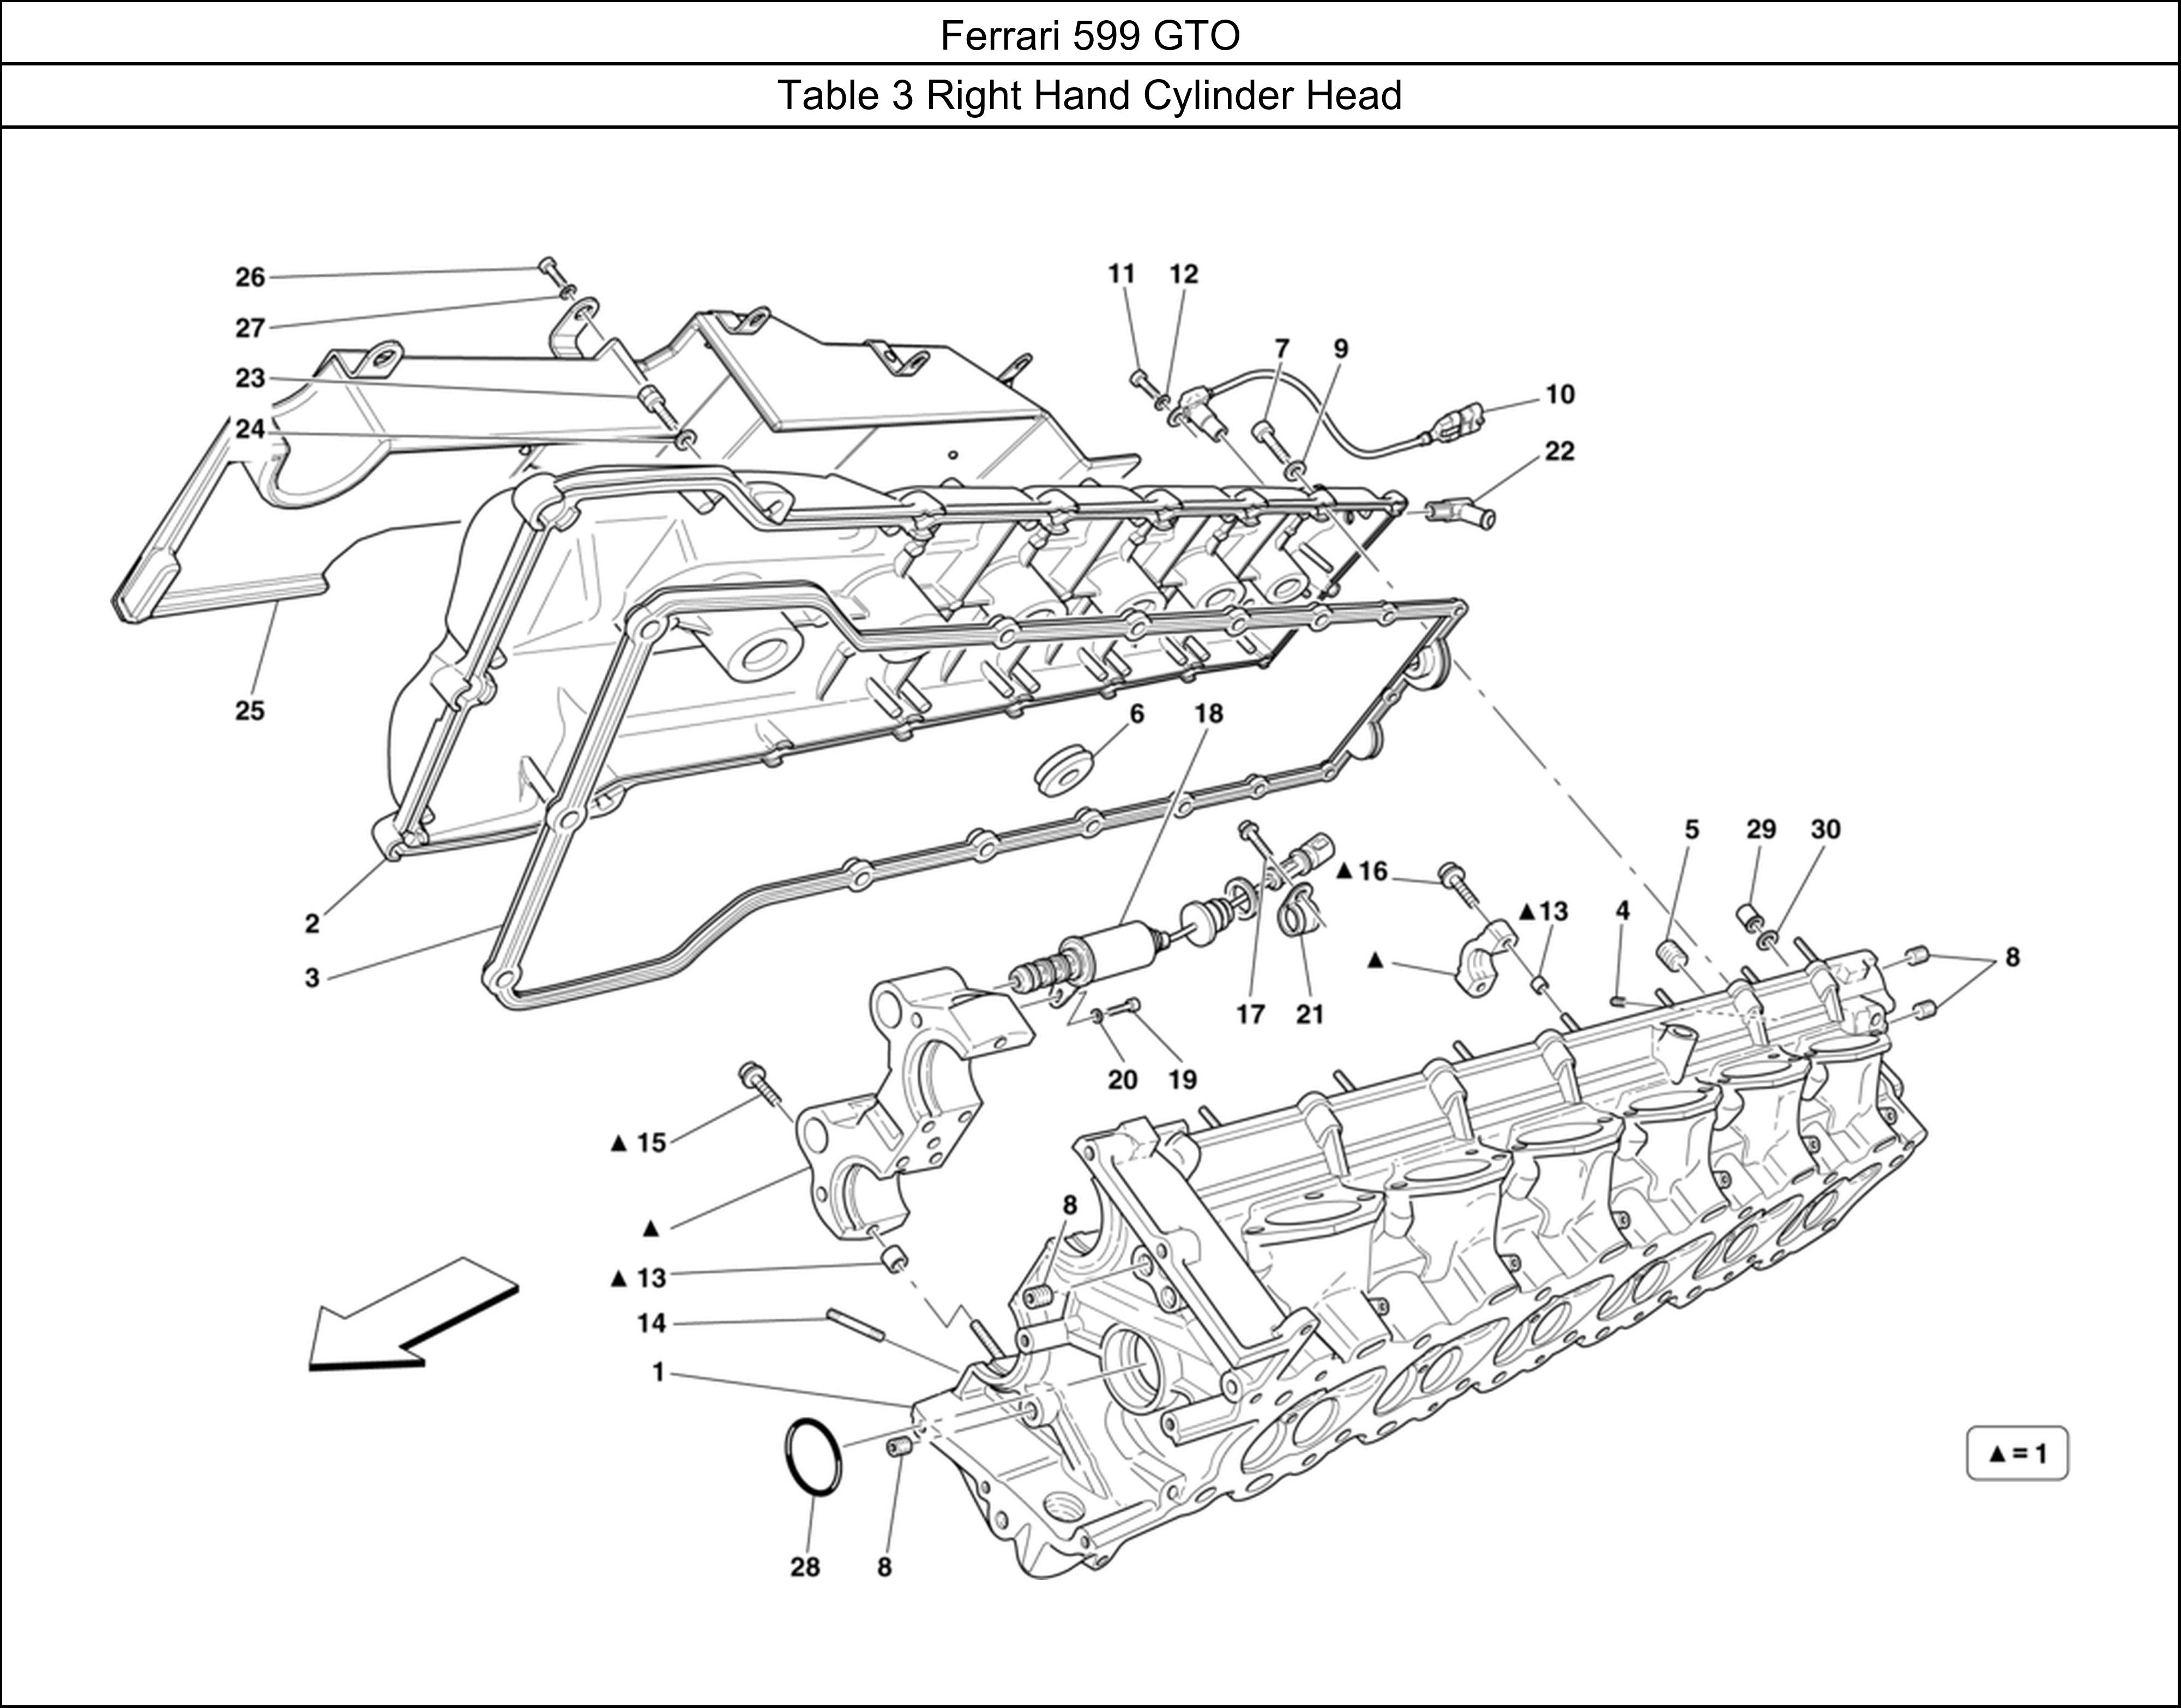 Ferrari Parts Ferrari 599 GTO Table 3 Right Hand Cylinder Head